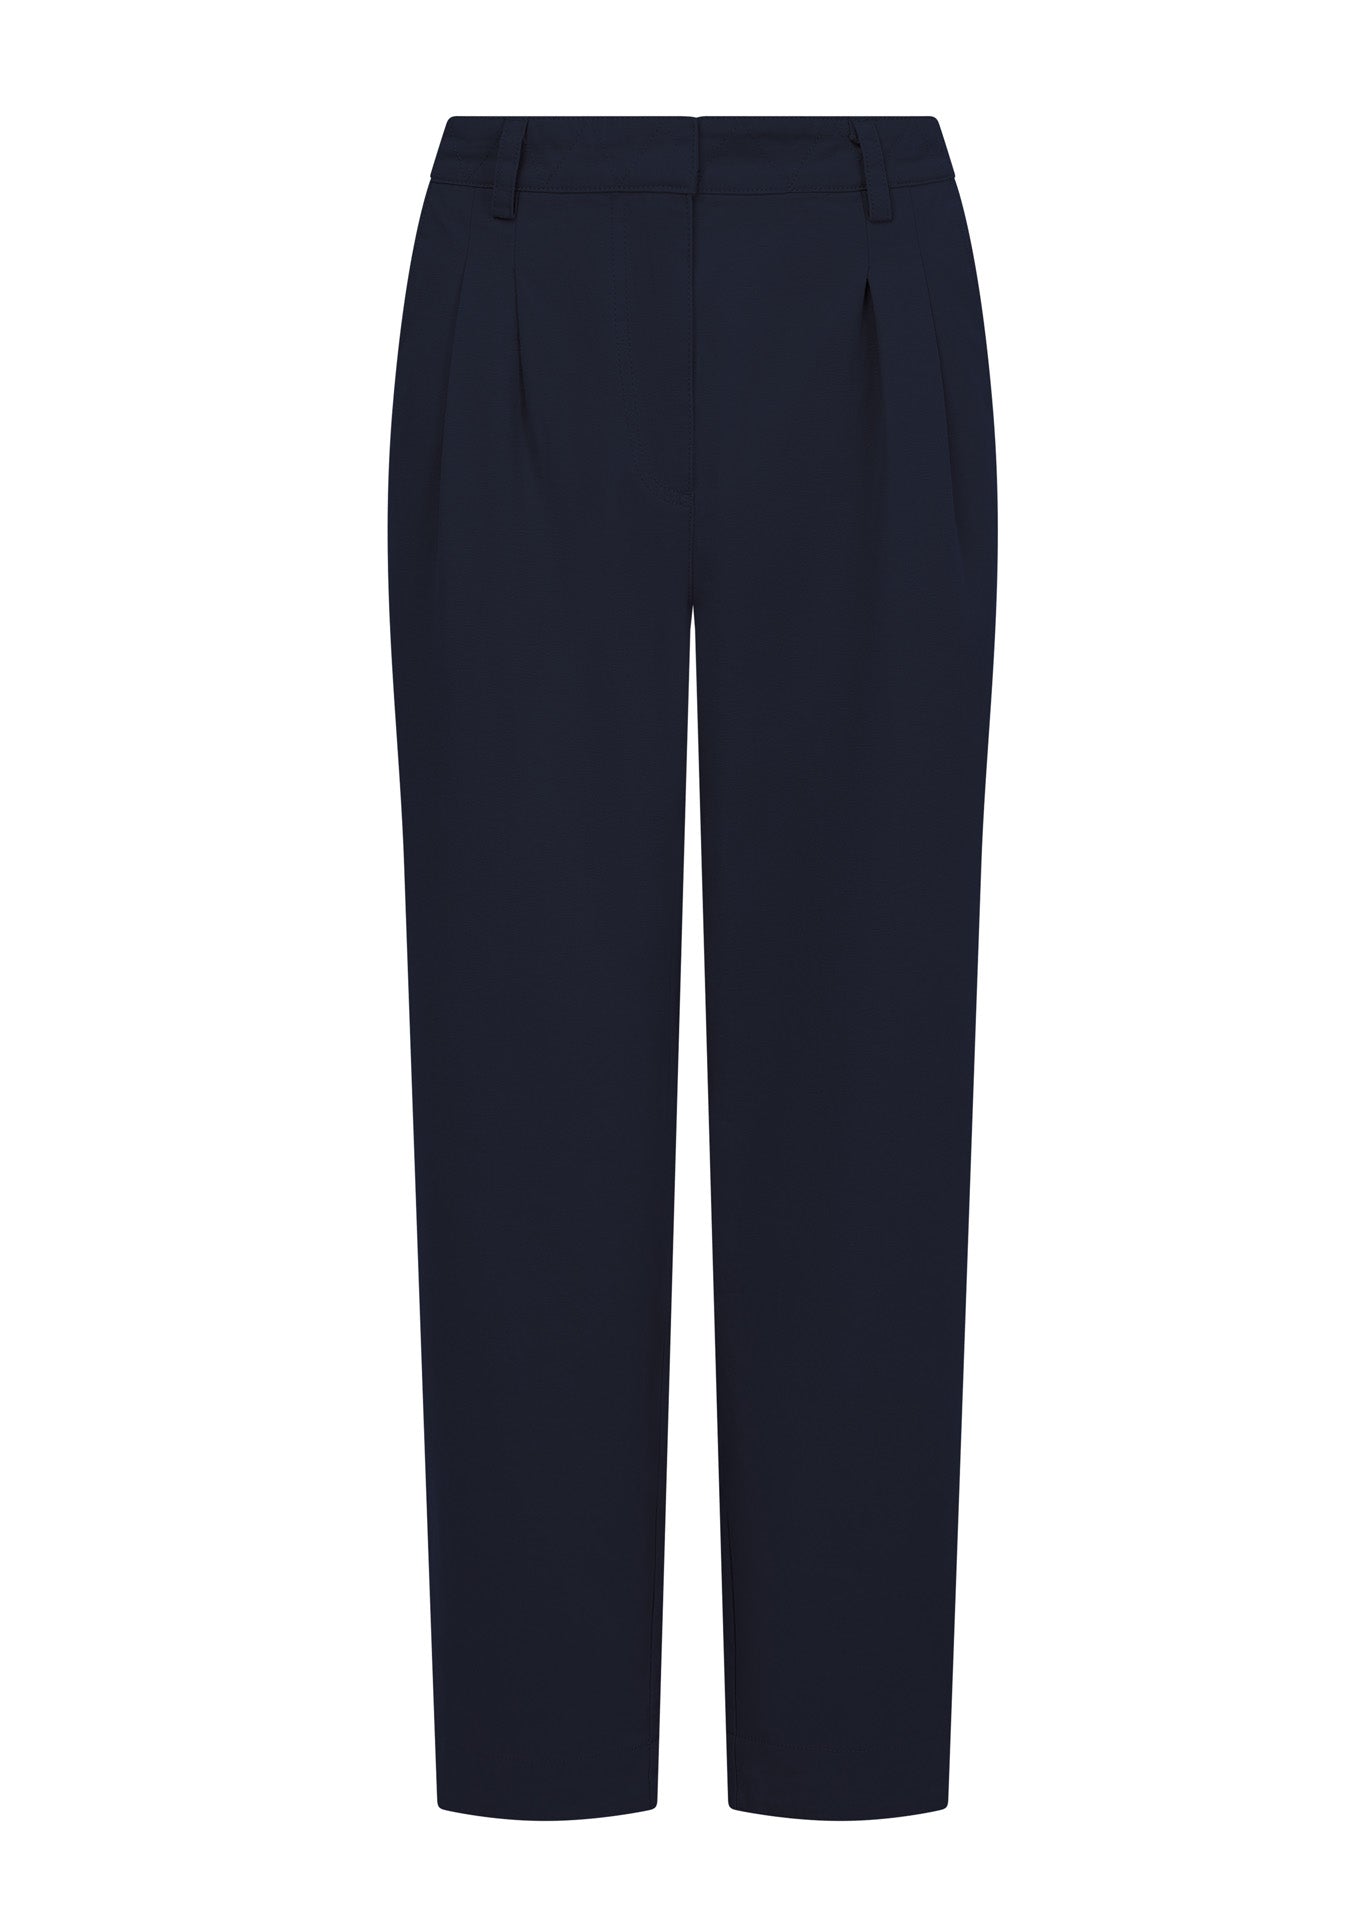 OLIA Organic Cotton Trousers - Dark Navy, SIZE 1 / UK 8 / EUR 36